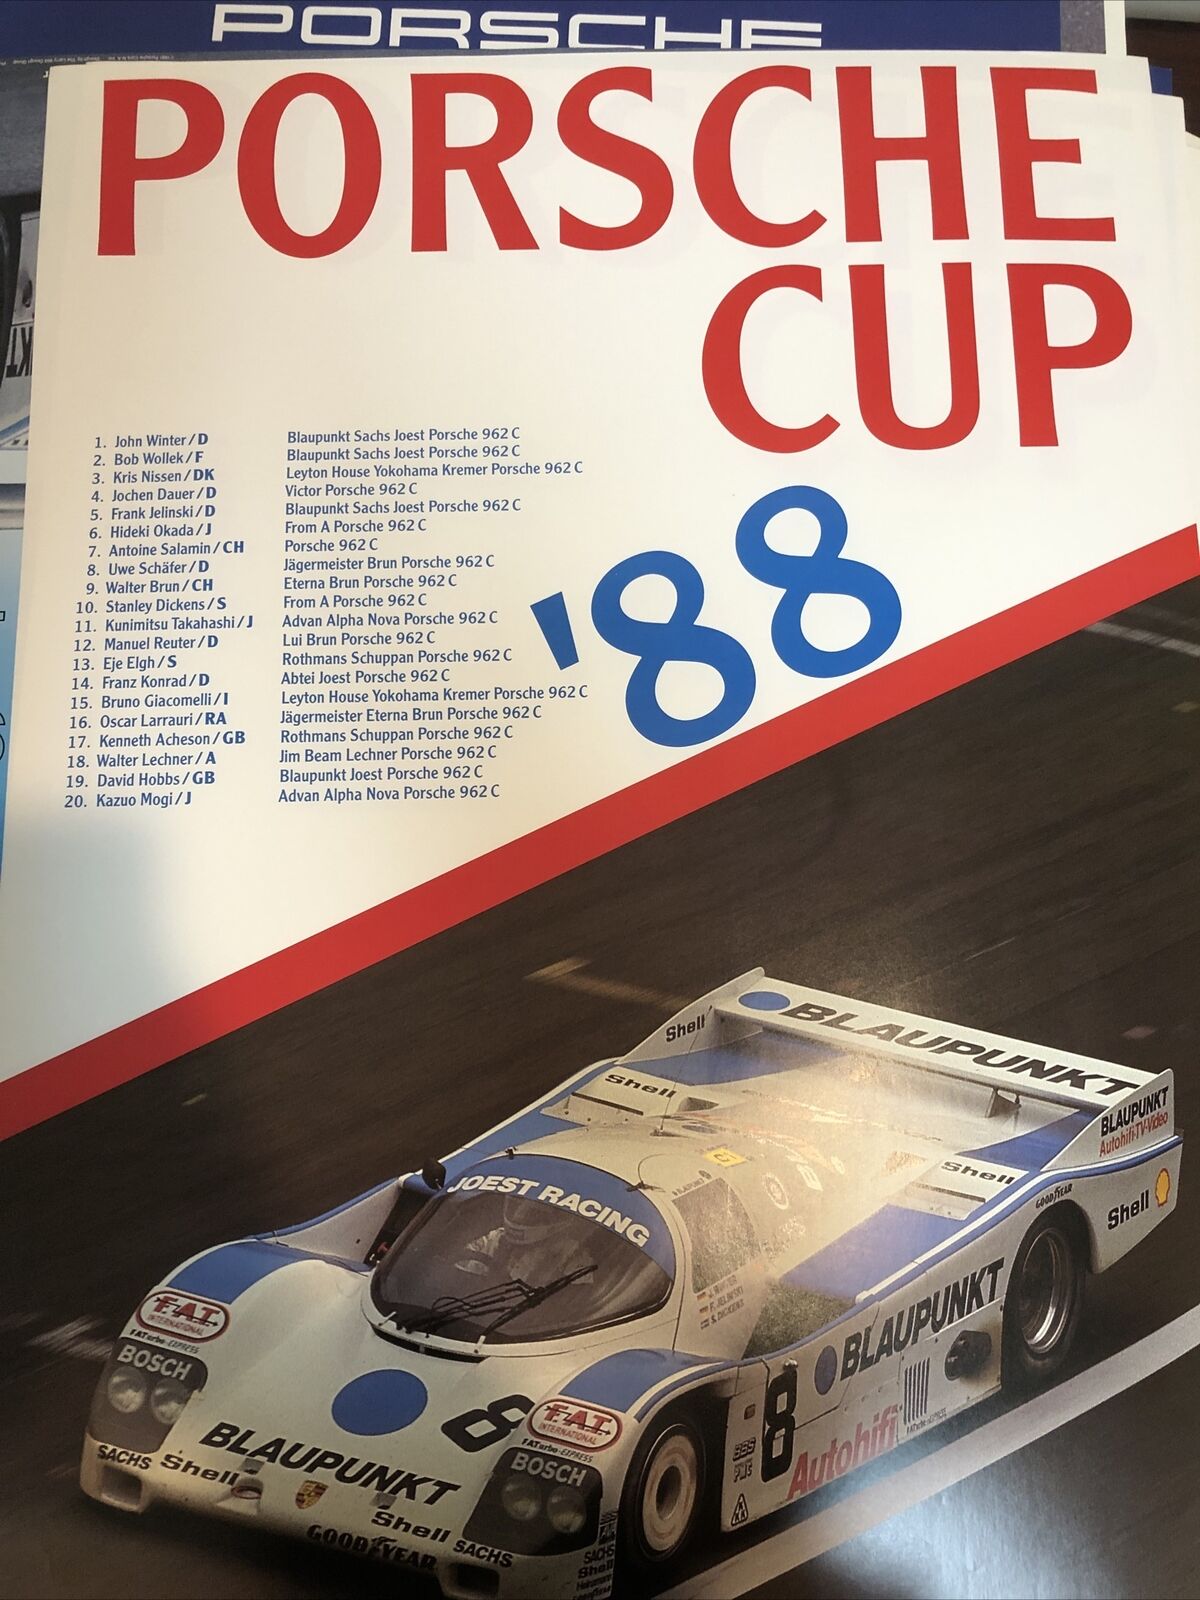 AWESOME ORIGINAL 1988 Porsche 962 Porsche Cup Victory Showroom Poster 